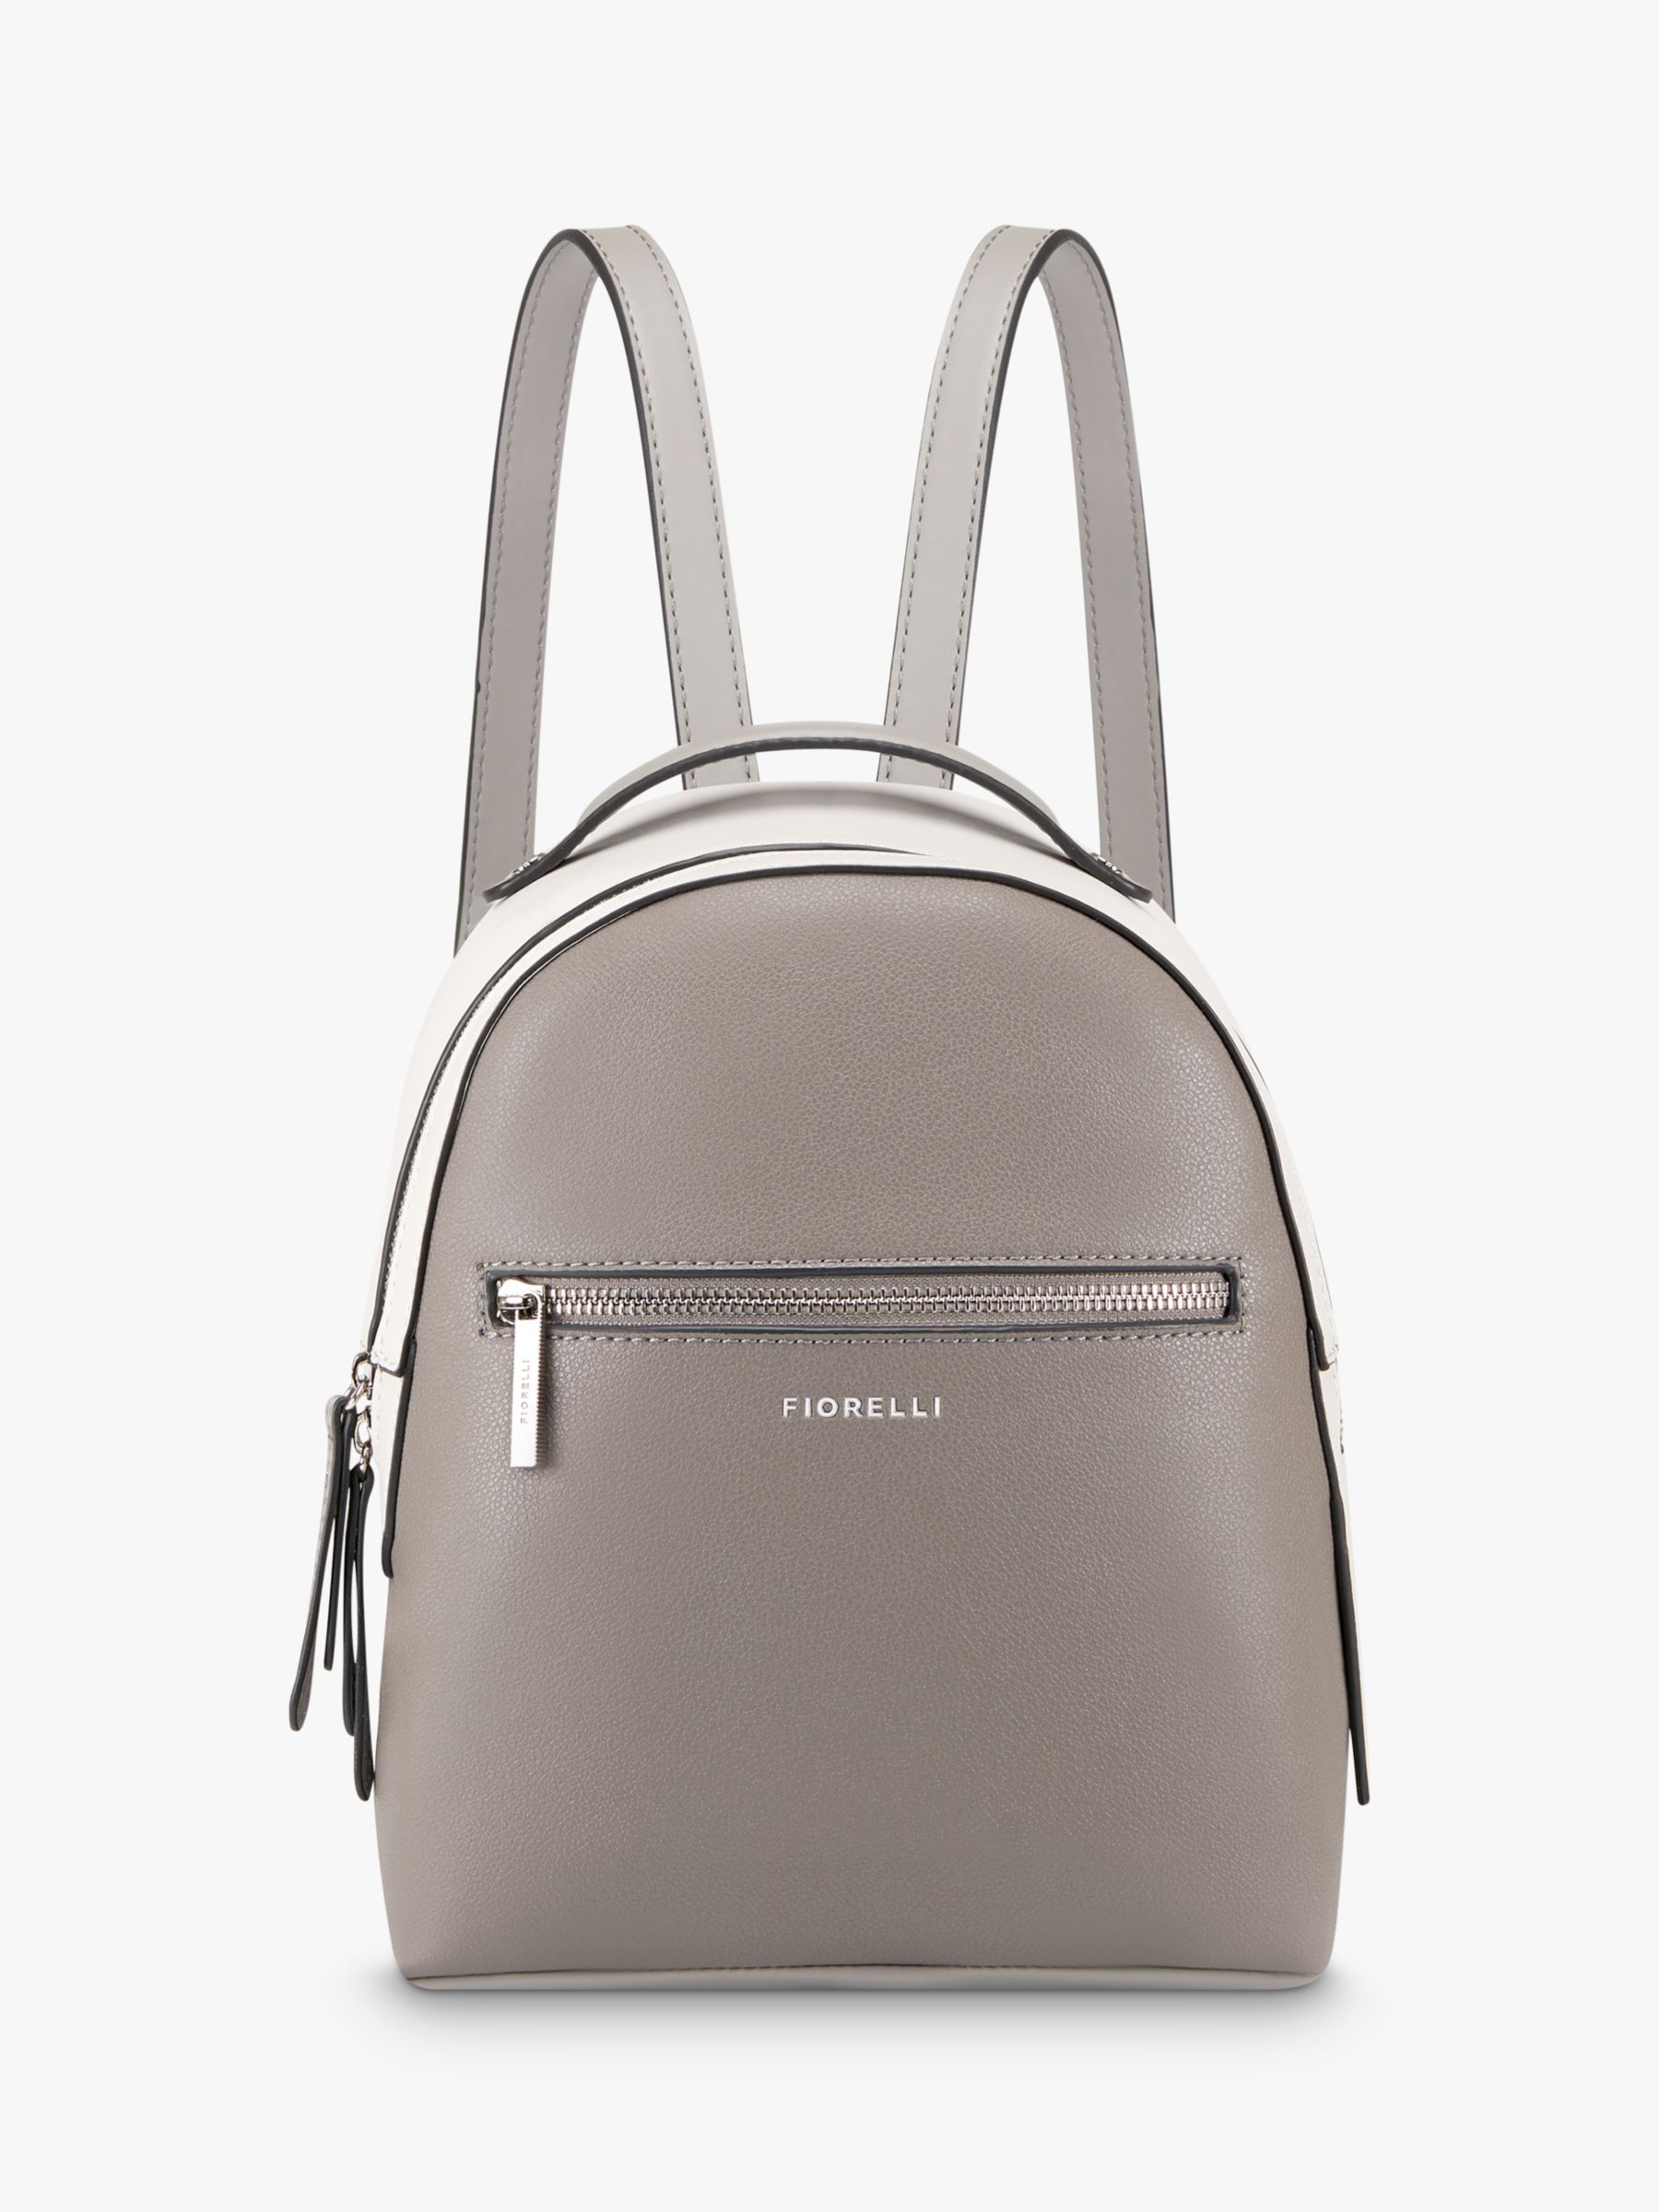 Fiorelli Anouk Backpack | Grey at John Lewis & Partners